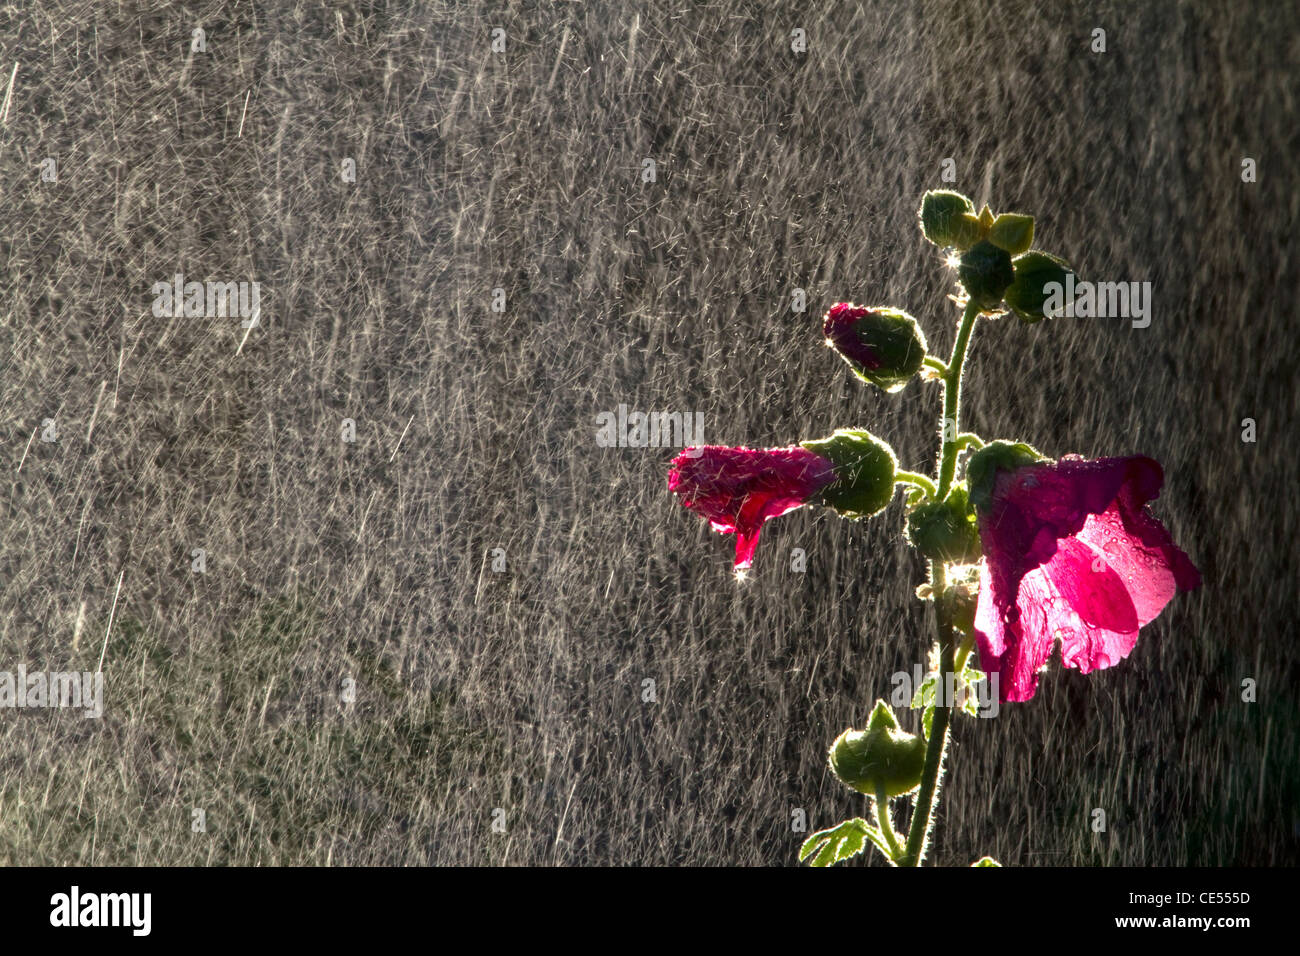 Hollyhock pianta flowering essendo irrigata da un irrigatore a Boise, Idaho, Stati Uniti d'America. Foto Stock